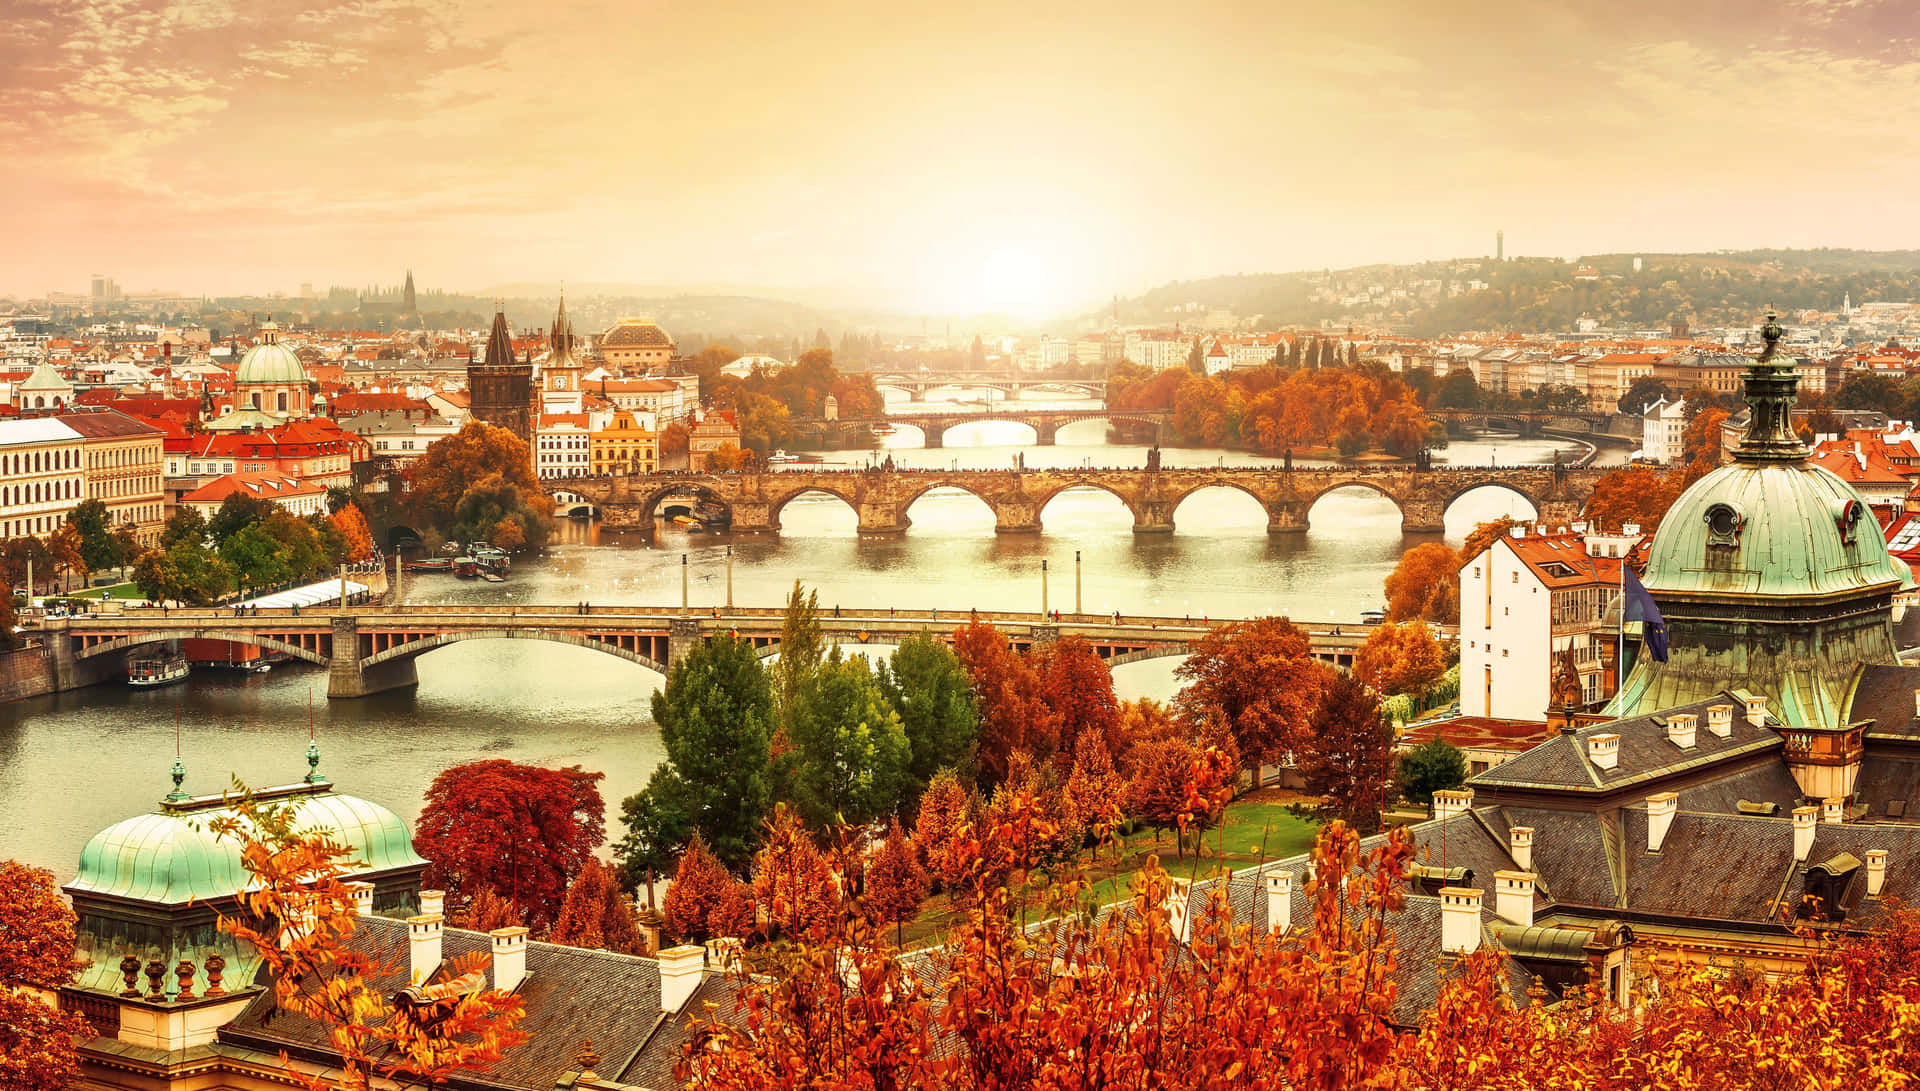 Fall Town - A picturesque view of a quaint town during autumn season Wallpaper